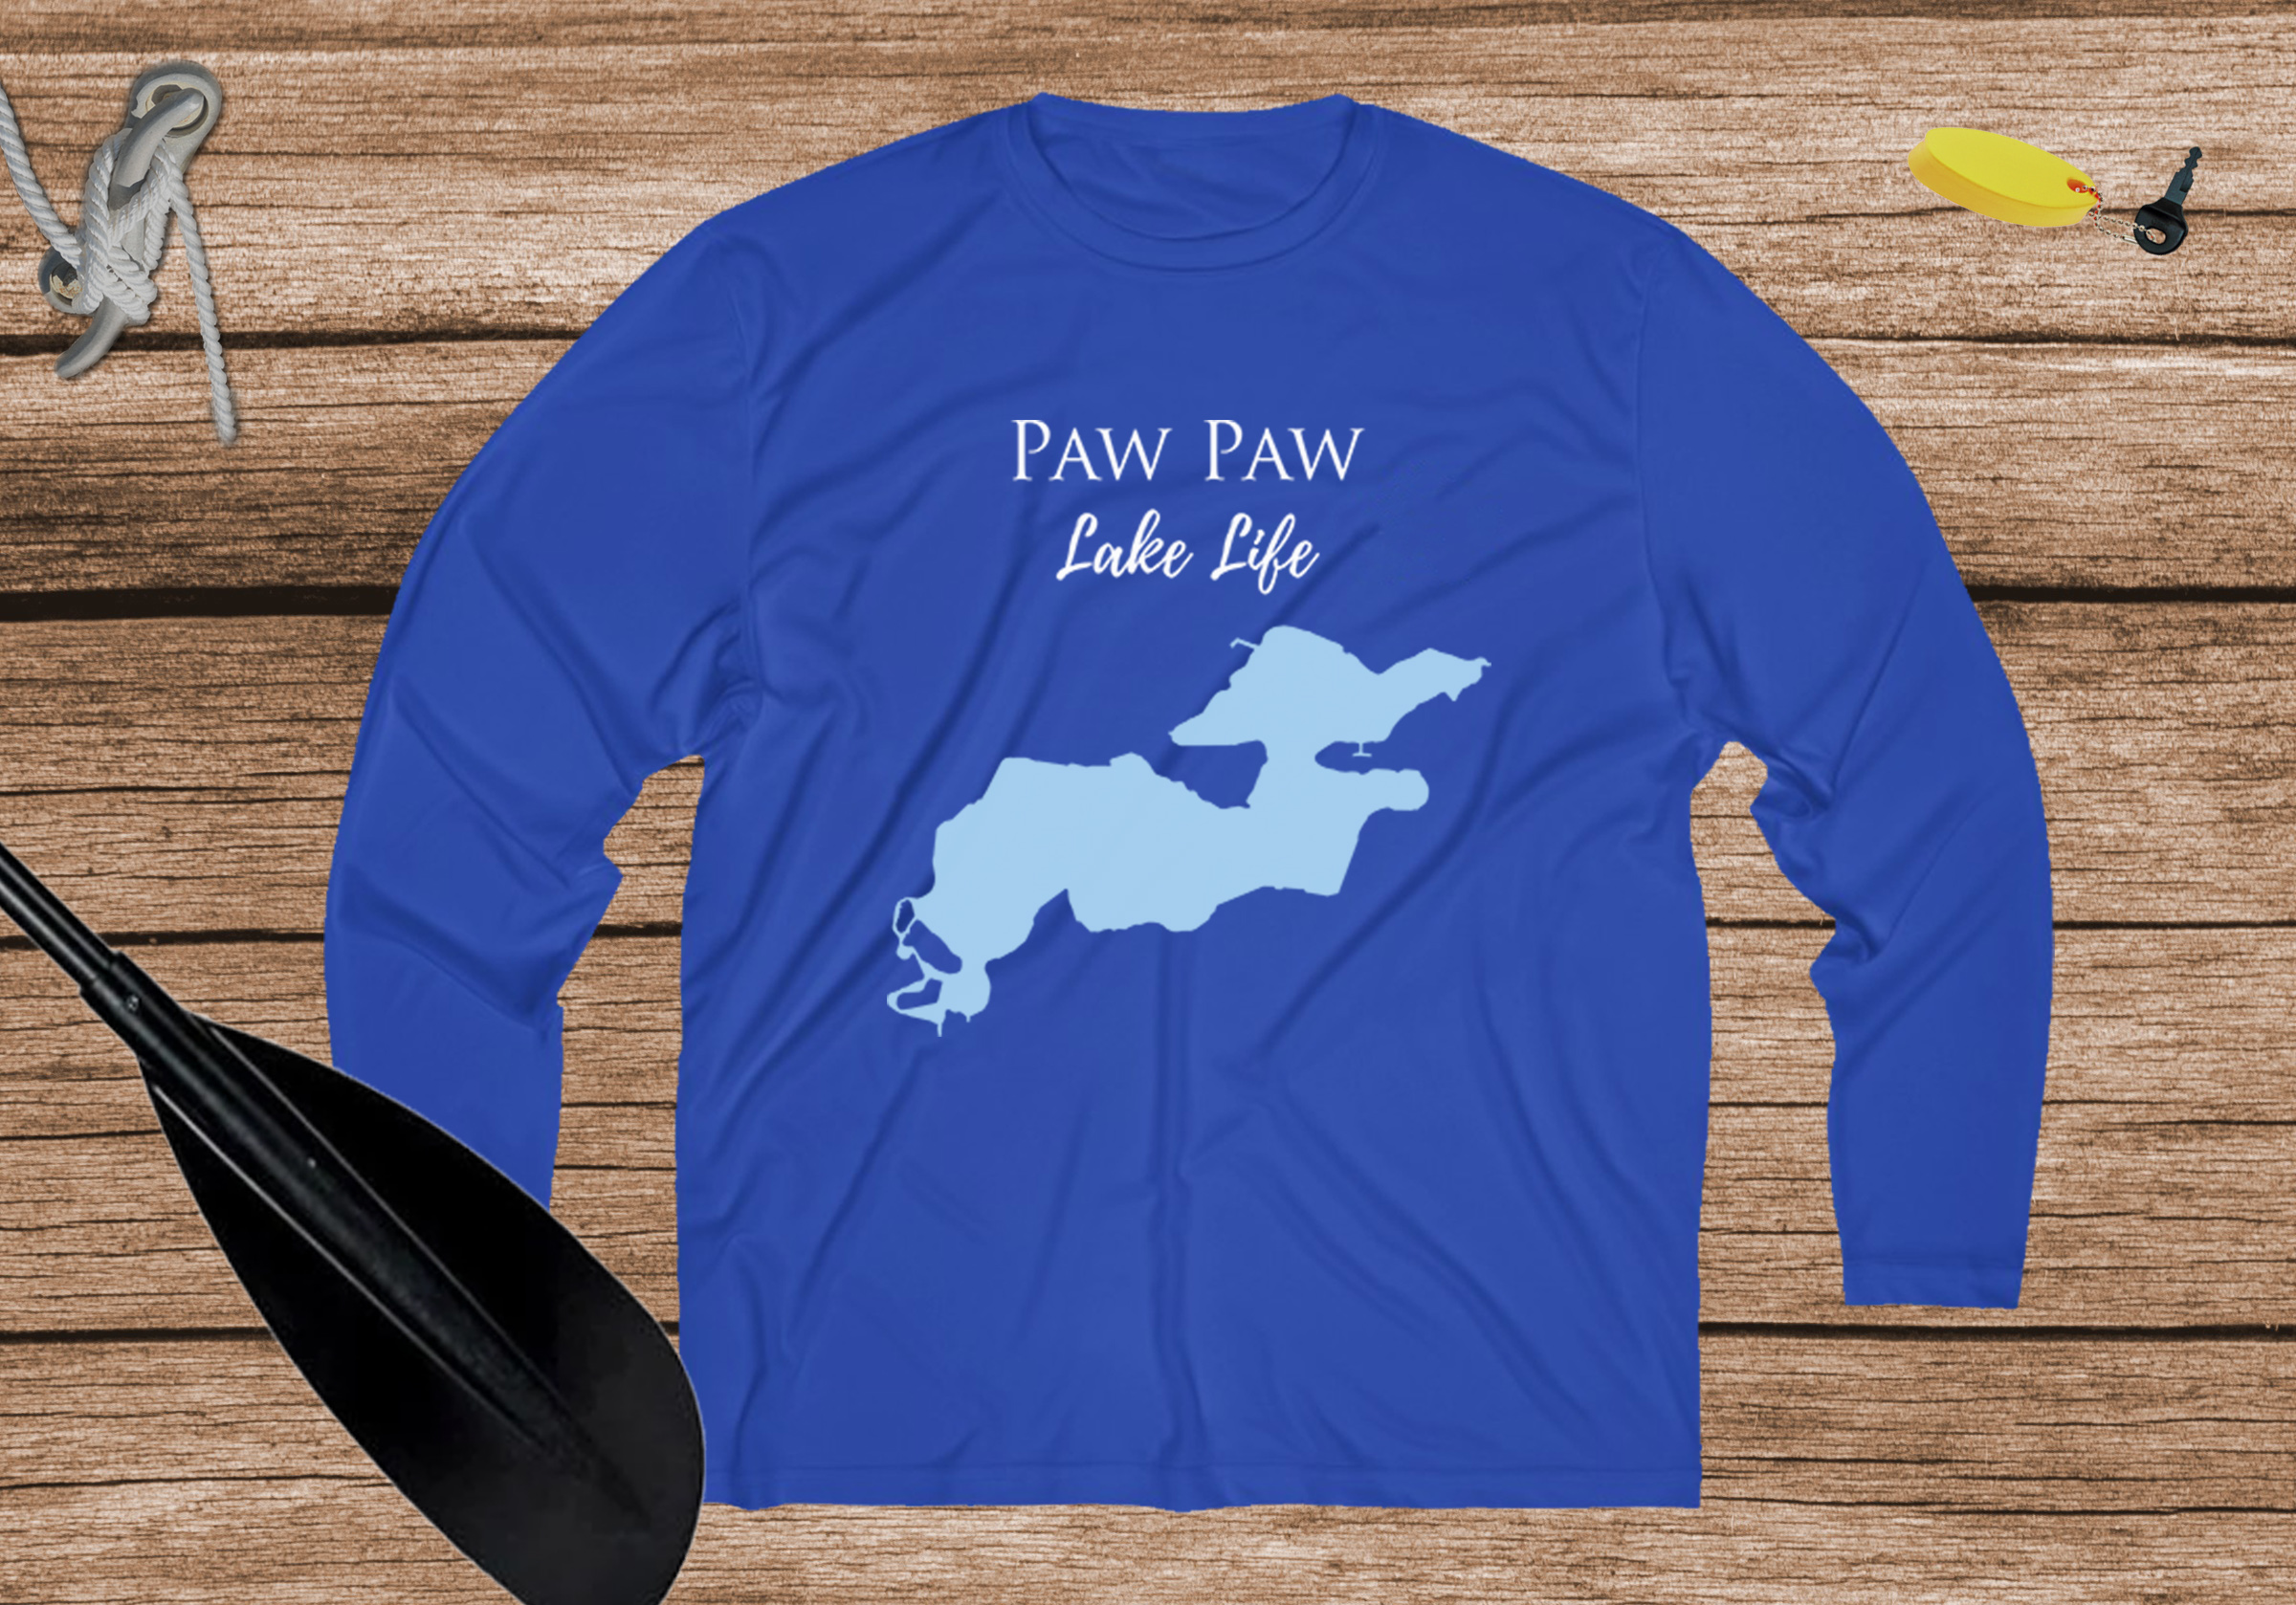 Paw Paw Lake Life Dri-fit Boating Shirt - Breathable Material- Men's Long Sleeve Moisture Wicking Tee - Michigan Lake